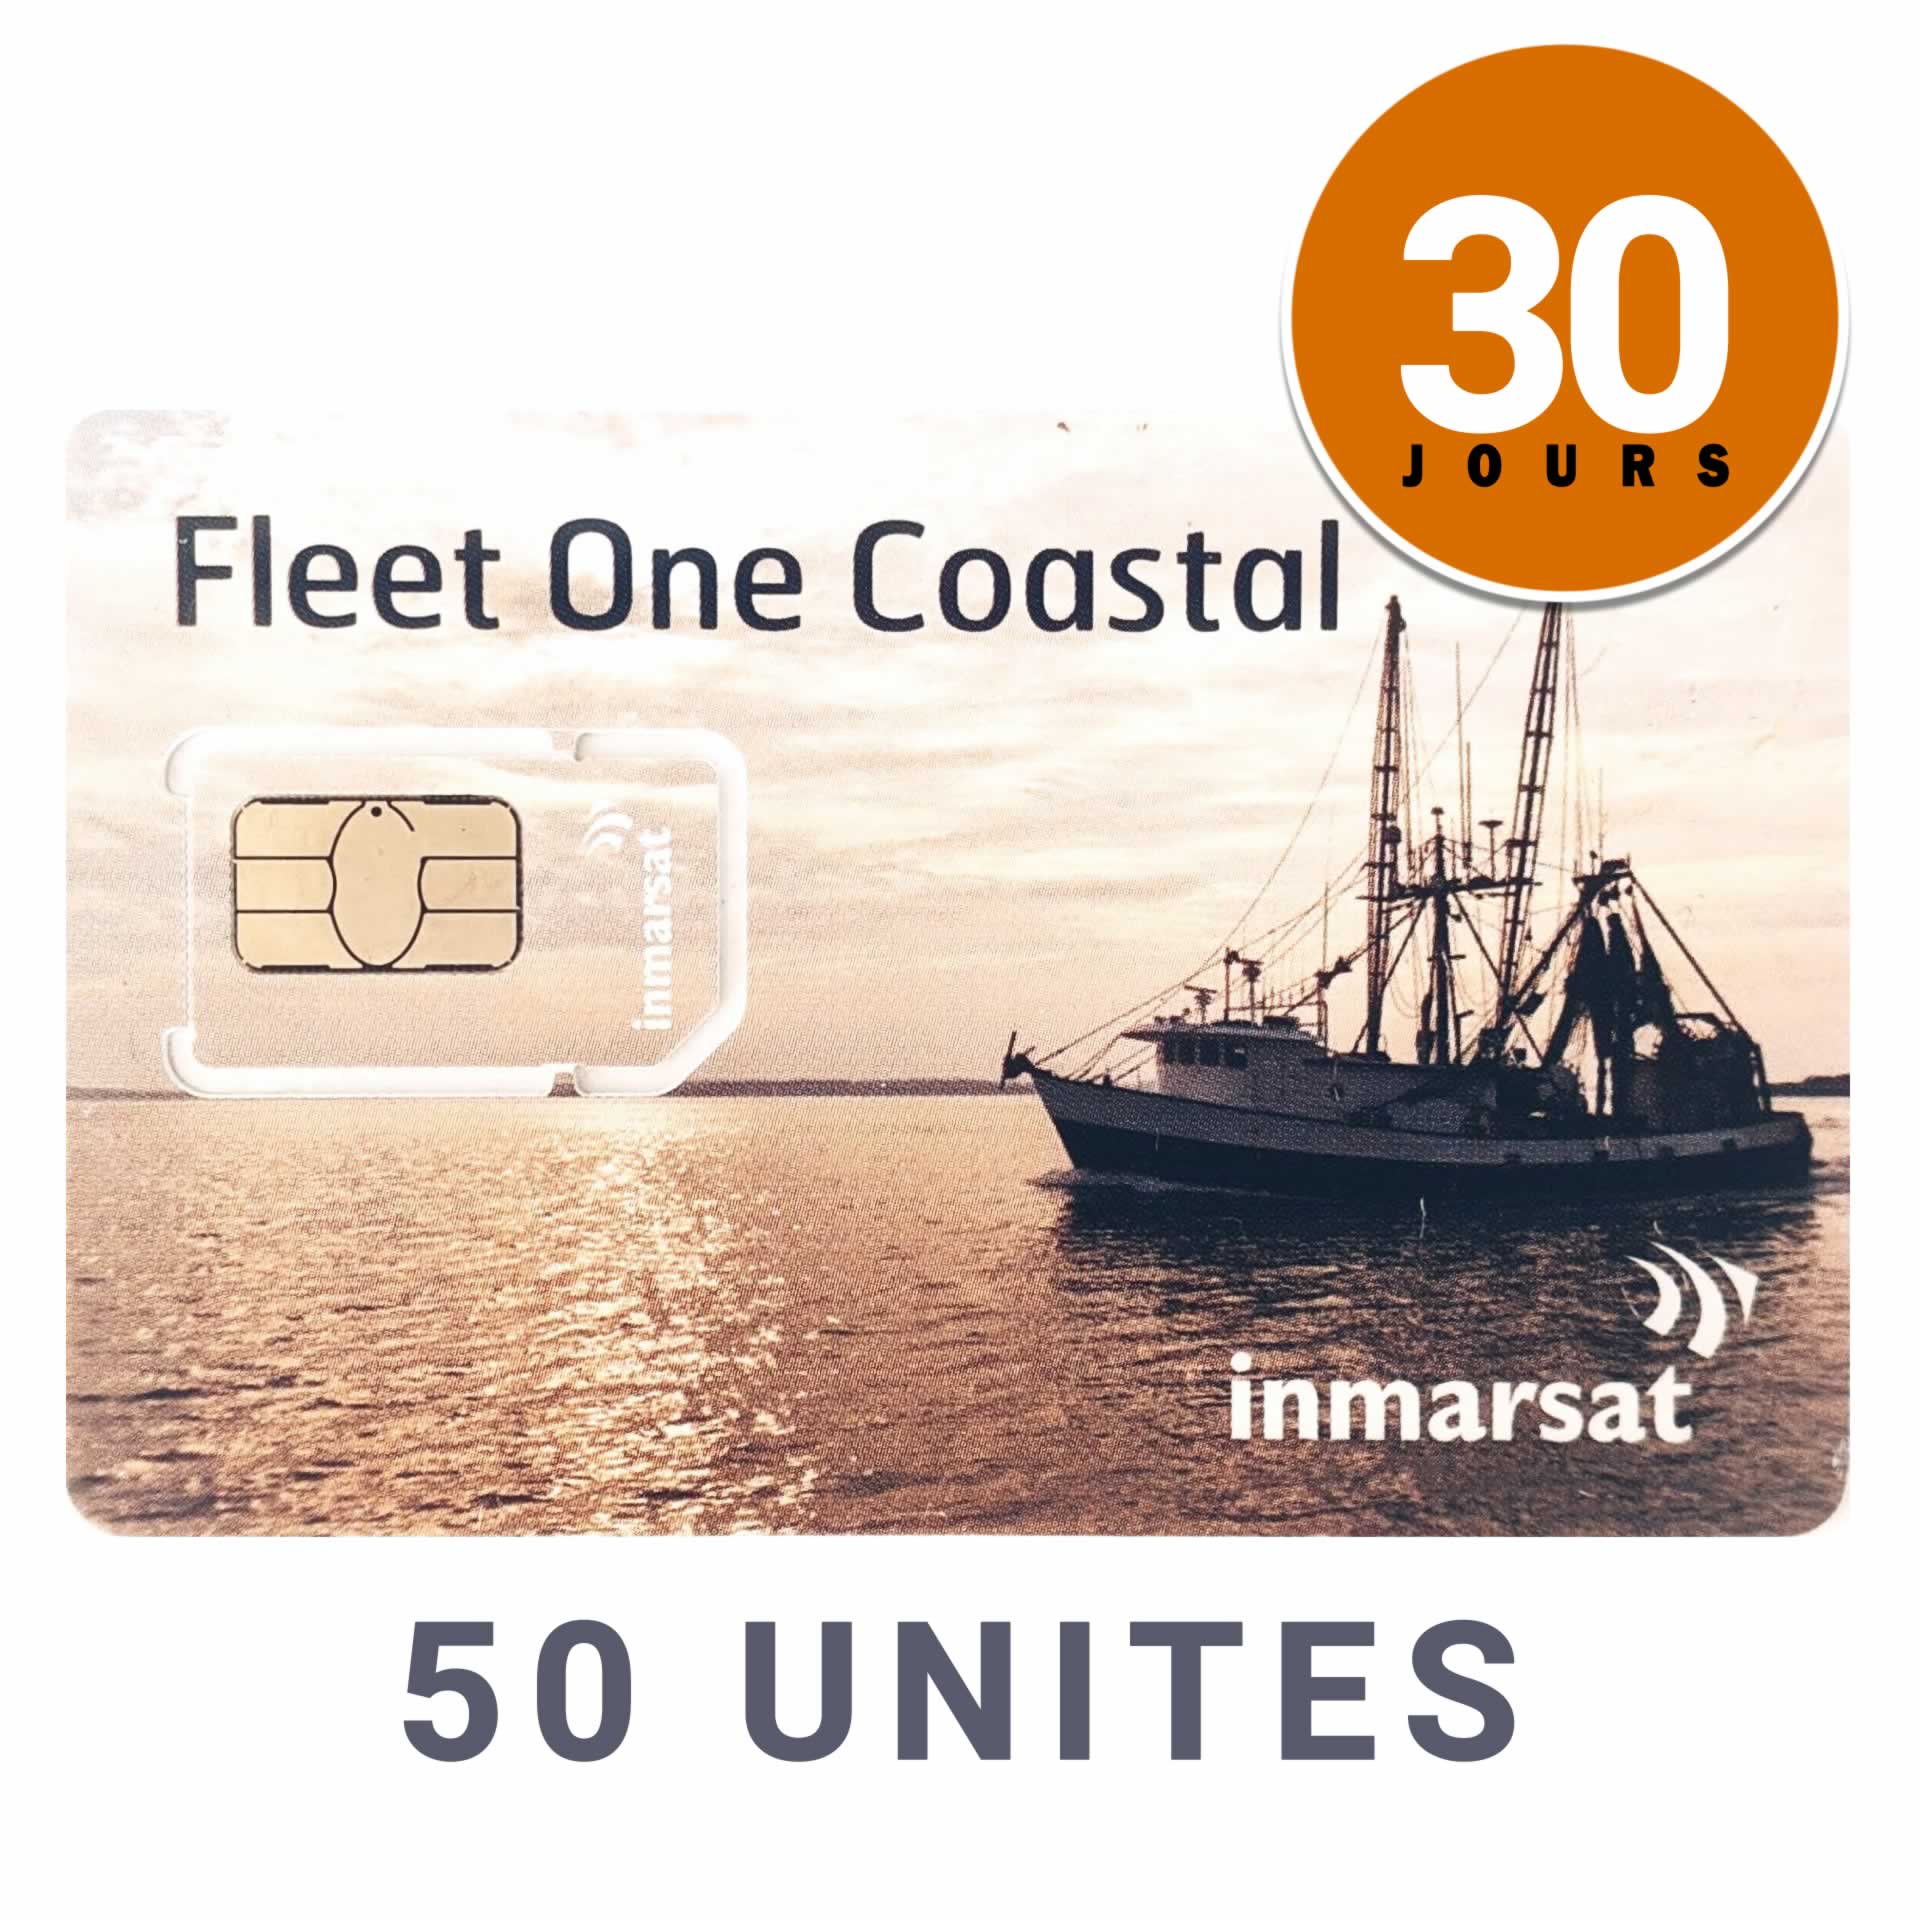 Carta prepagata INMARSAT Coast FLEET ONE ricaricabile - 50 UNITA' - 30 GIORNI